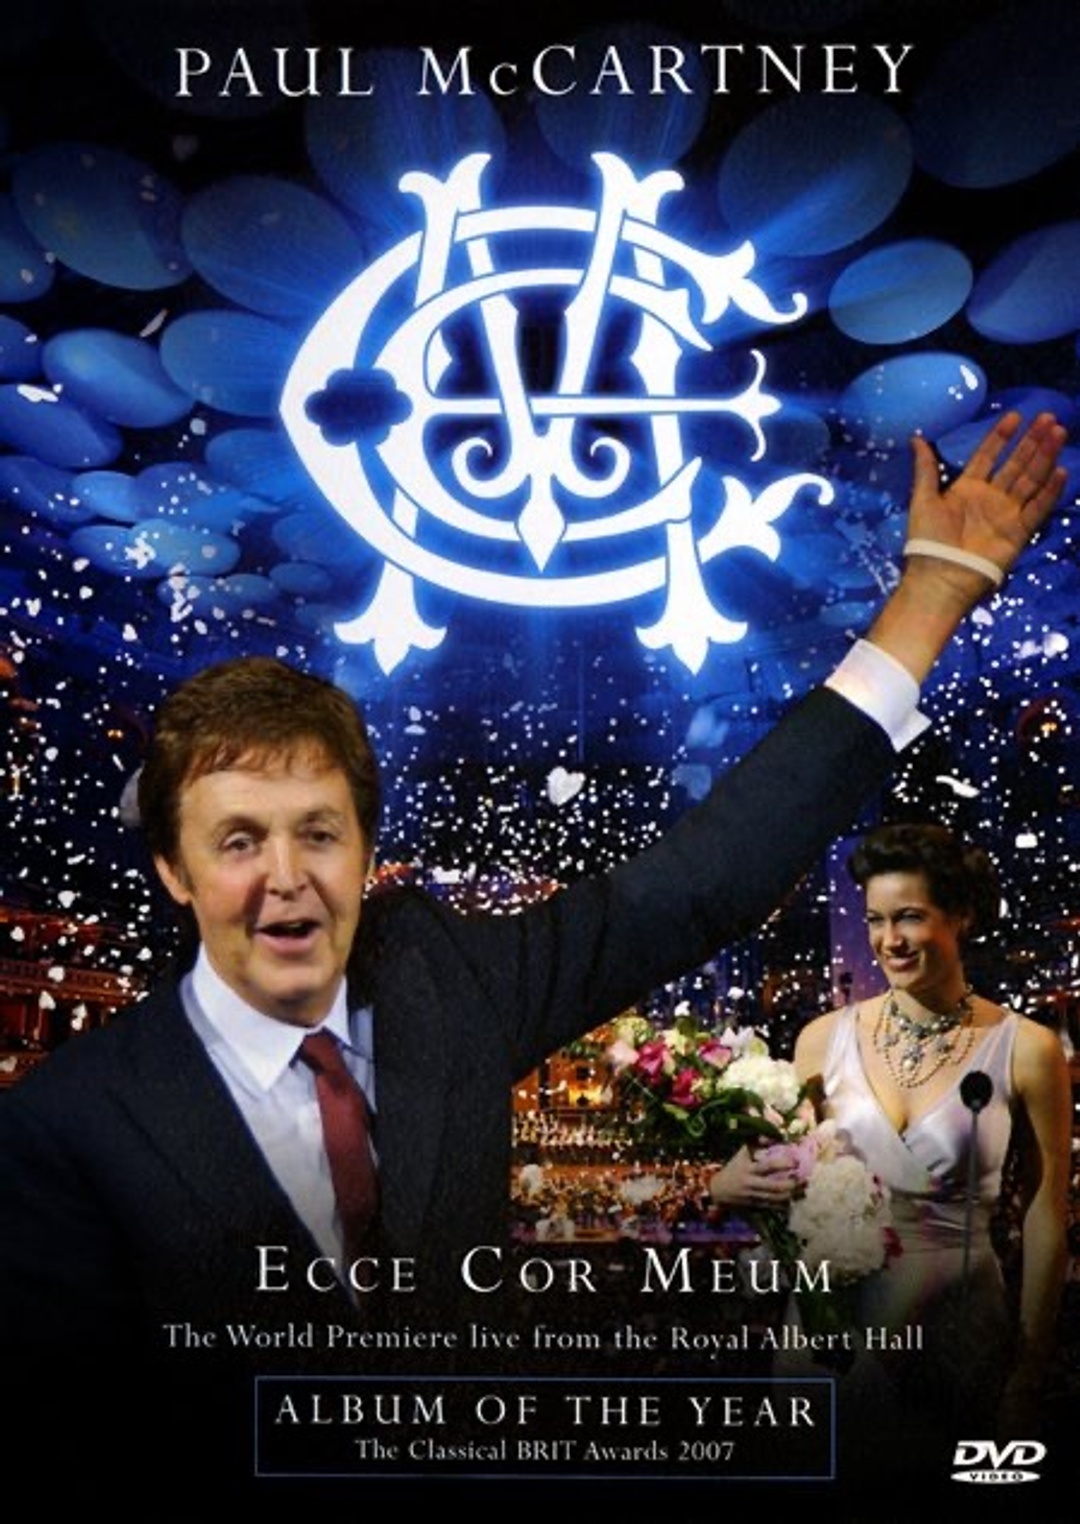 Film cover for Paul McCartney's Ecco Cor Meum